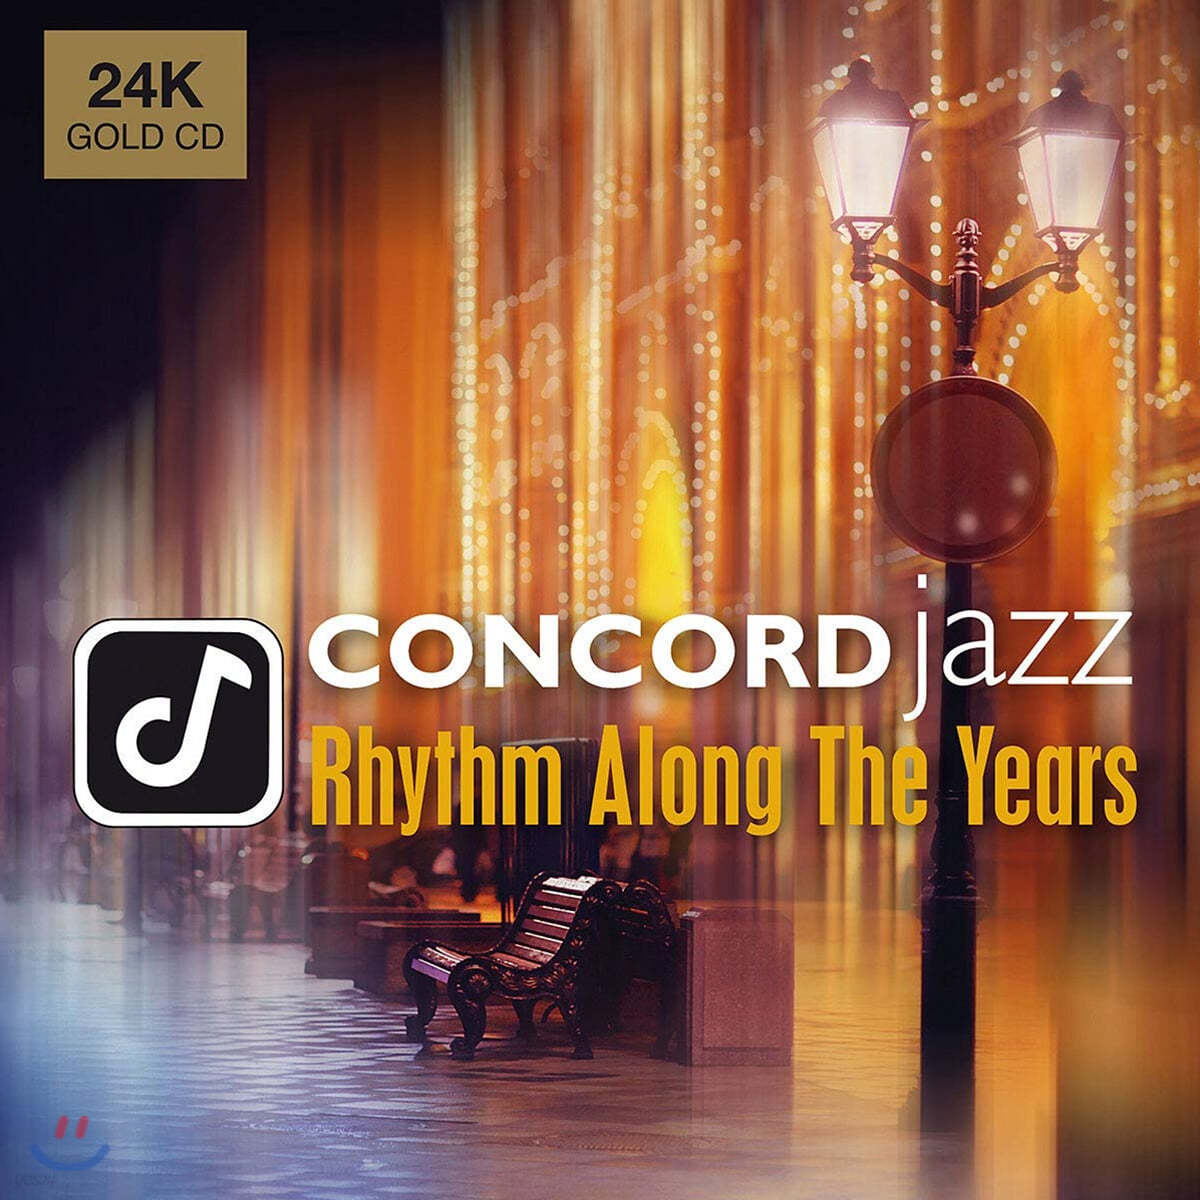 Concord Jazz 레이블 2019 컴필레이션 앨범 (Concord Jazz - Rhythm Along the Years) [24K Gold CD]